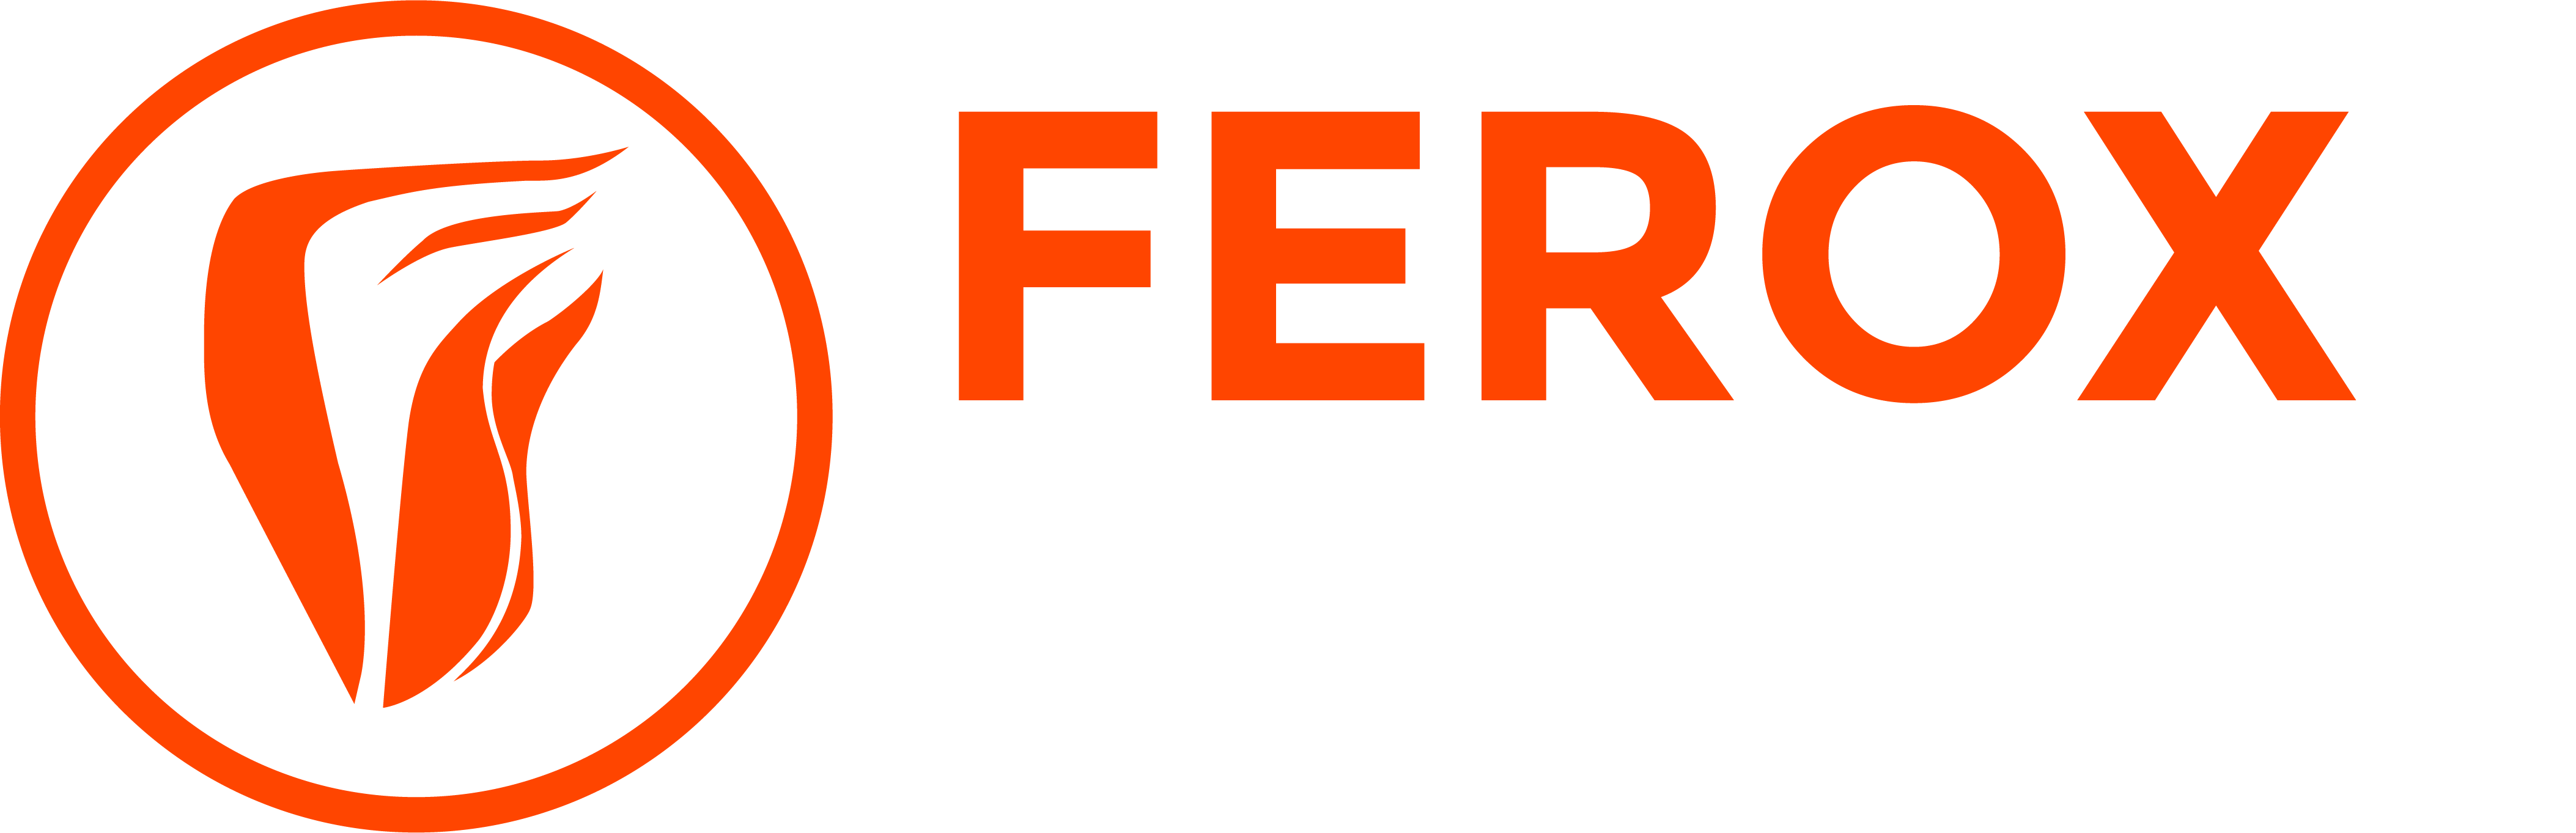 Ferox Events